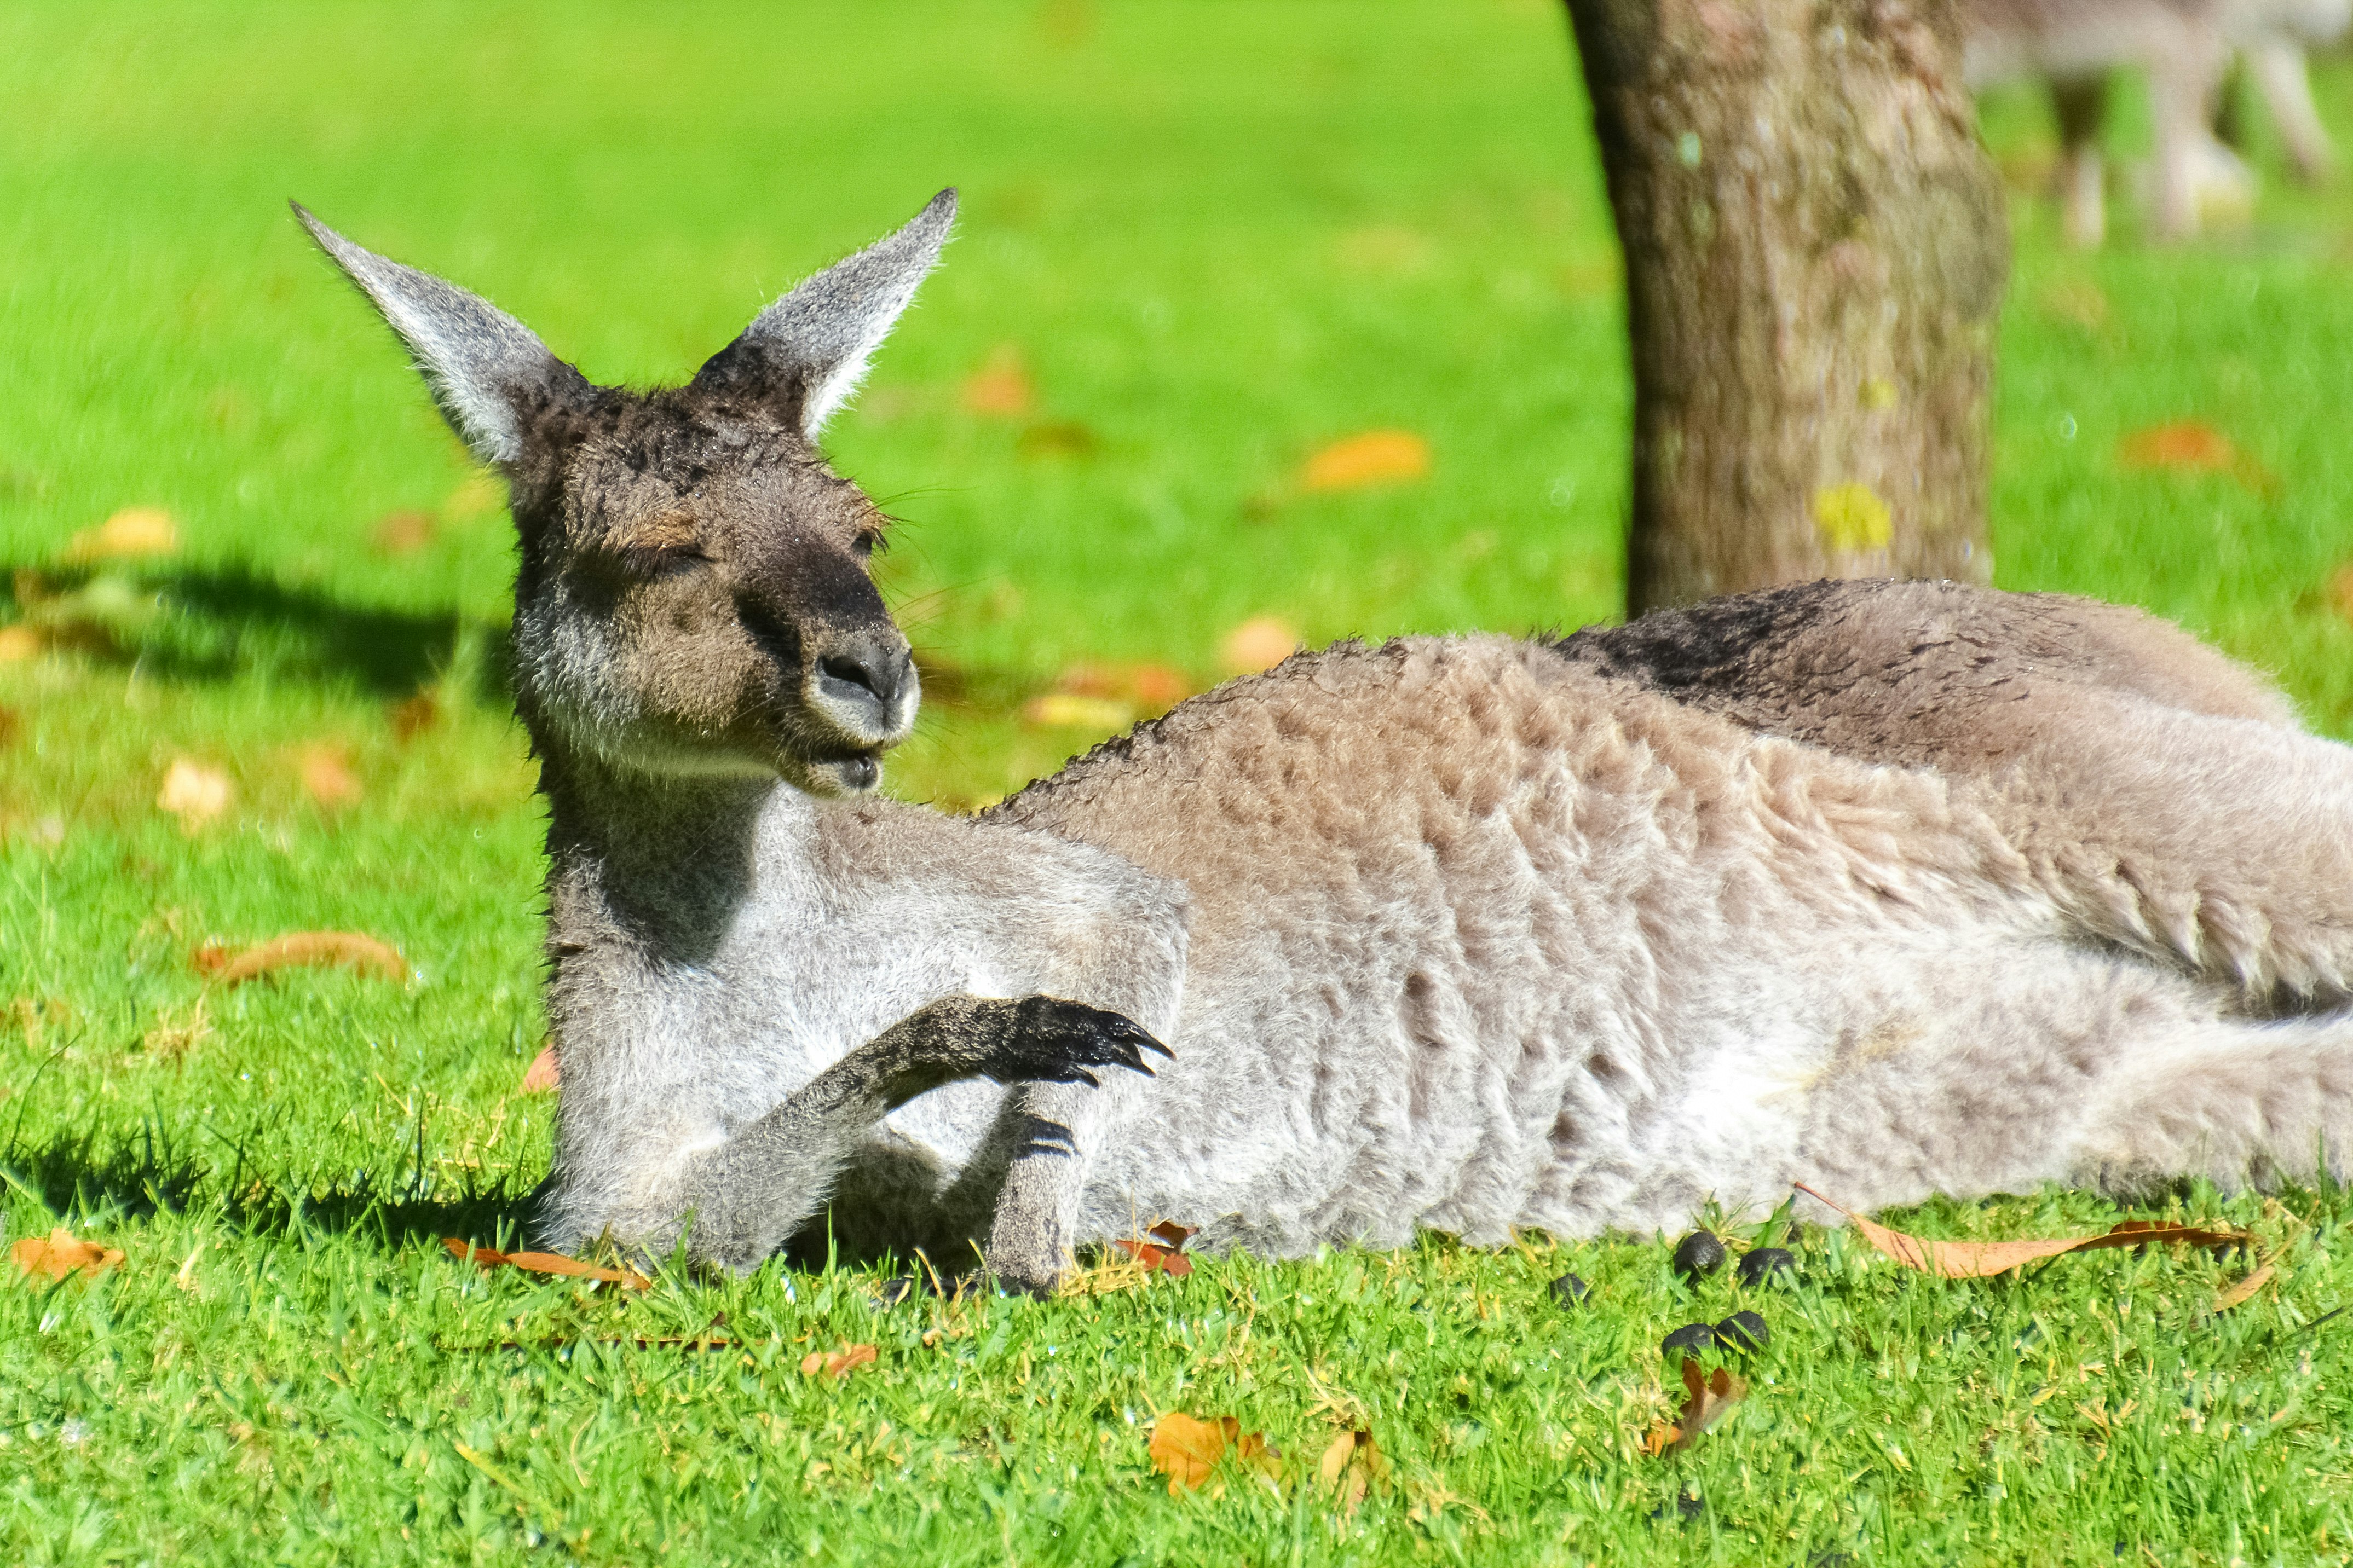 gray kangaroo lying on green grass field during daytime